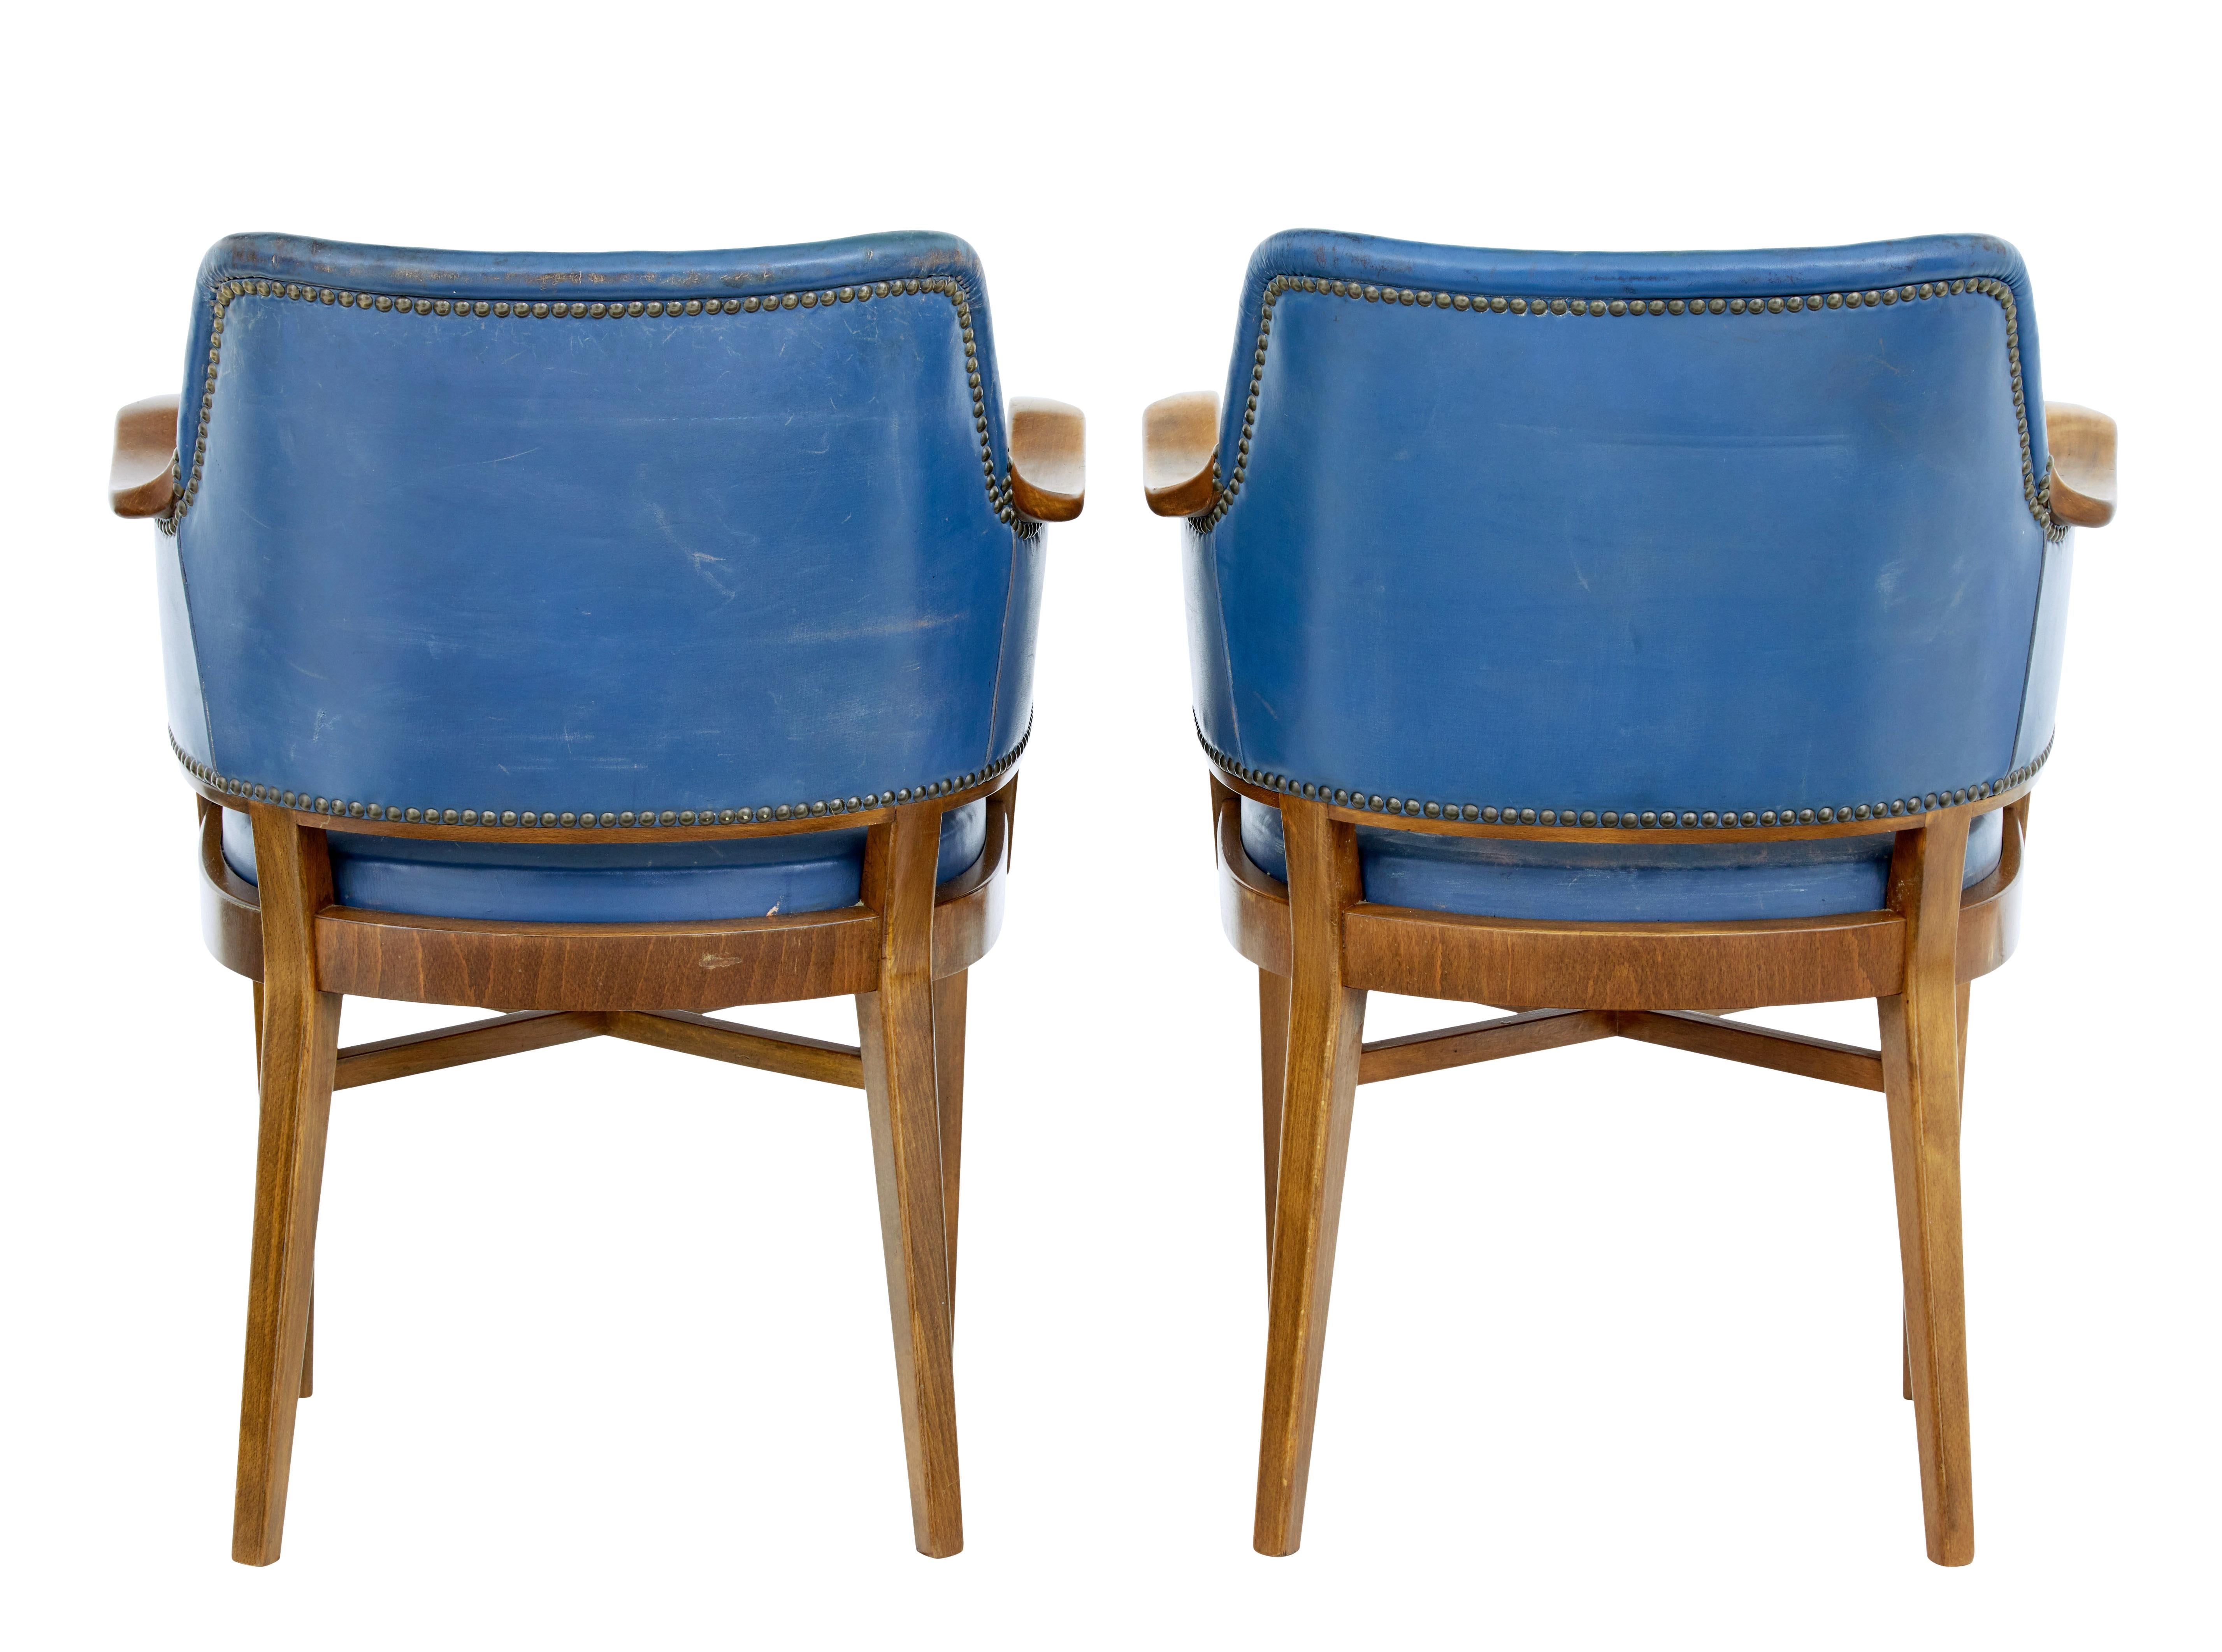 Scandinavian Modern Pair of Mid-20th Century Teak and Leather Armchairs